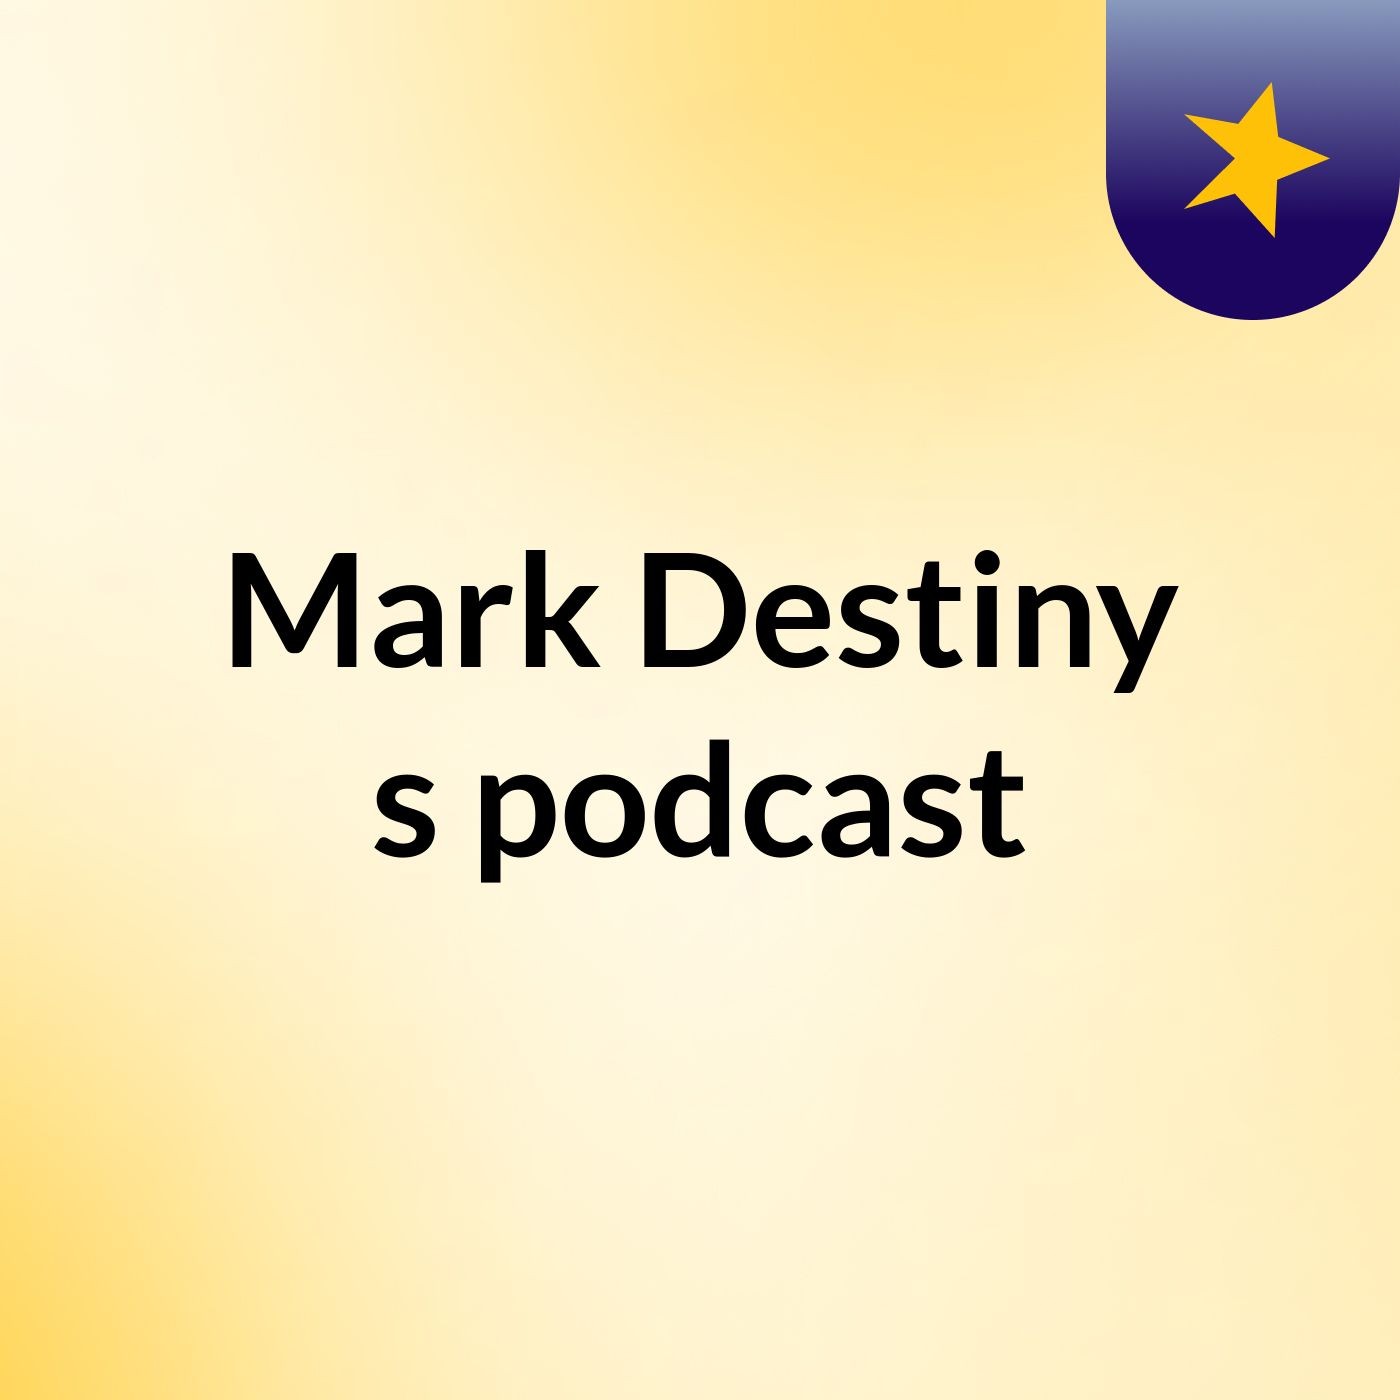 Mark Destiny's podcast